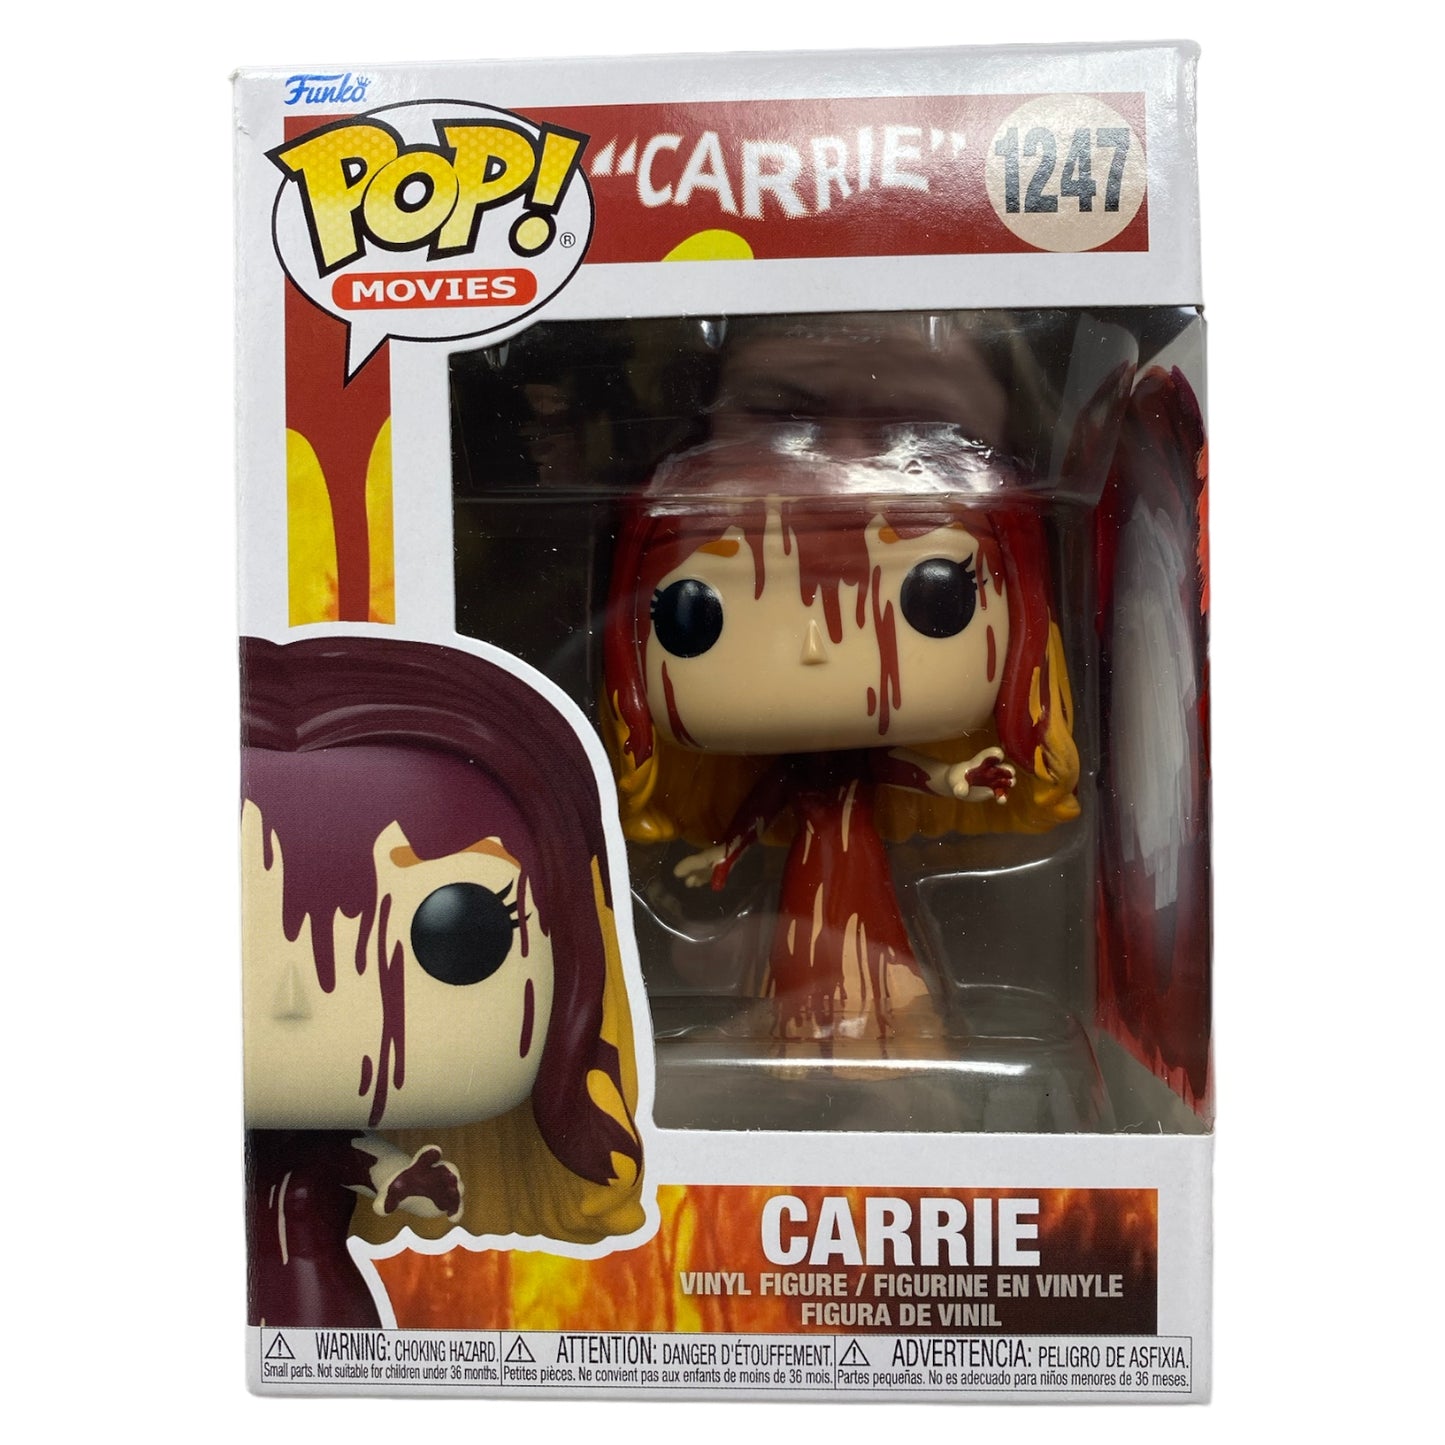 Movies - Carrie 1247, TCC X DNA Custom